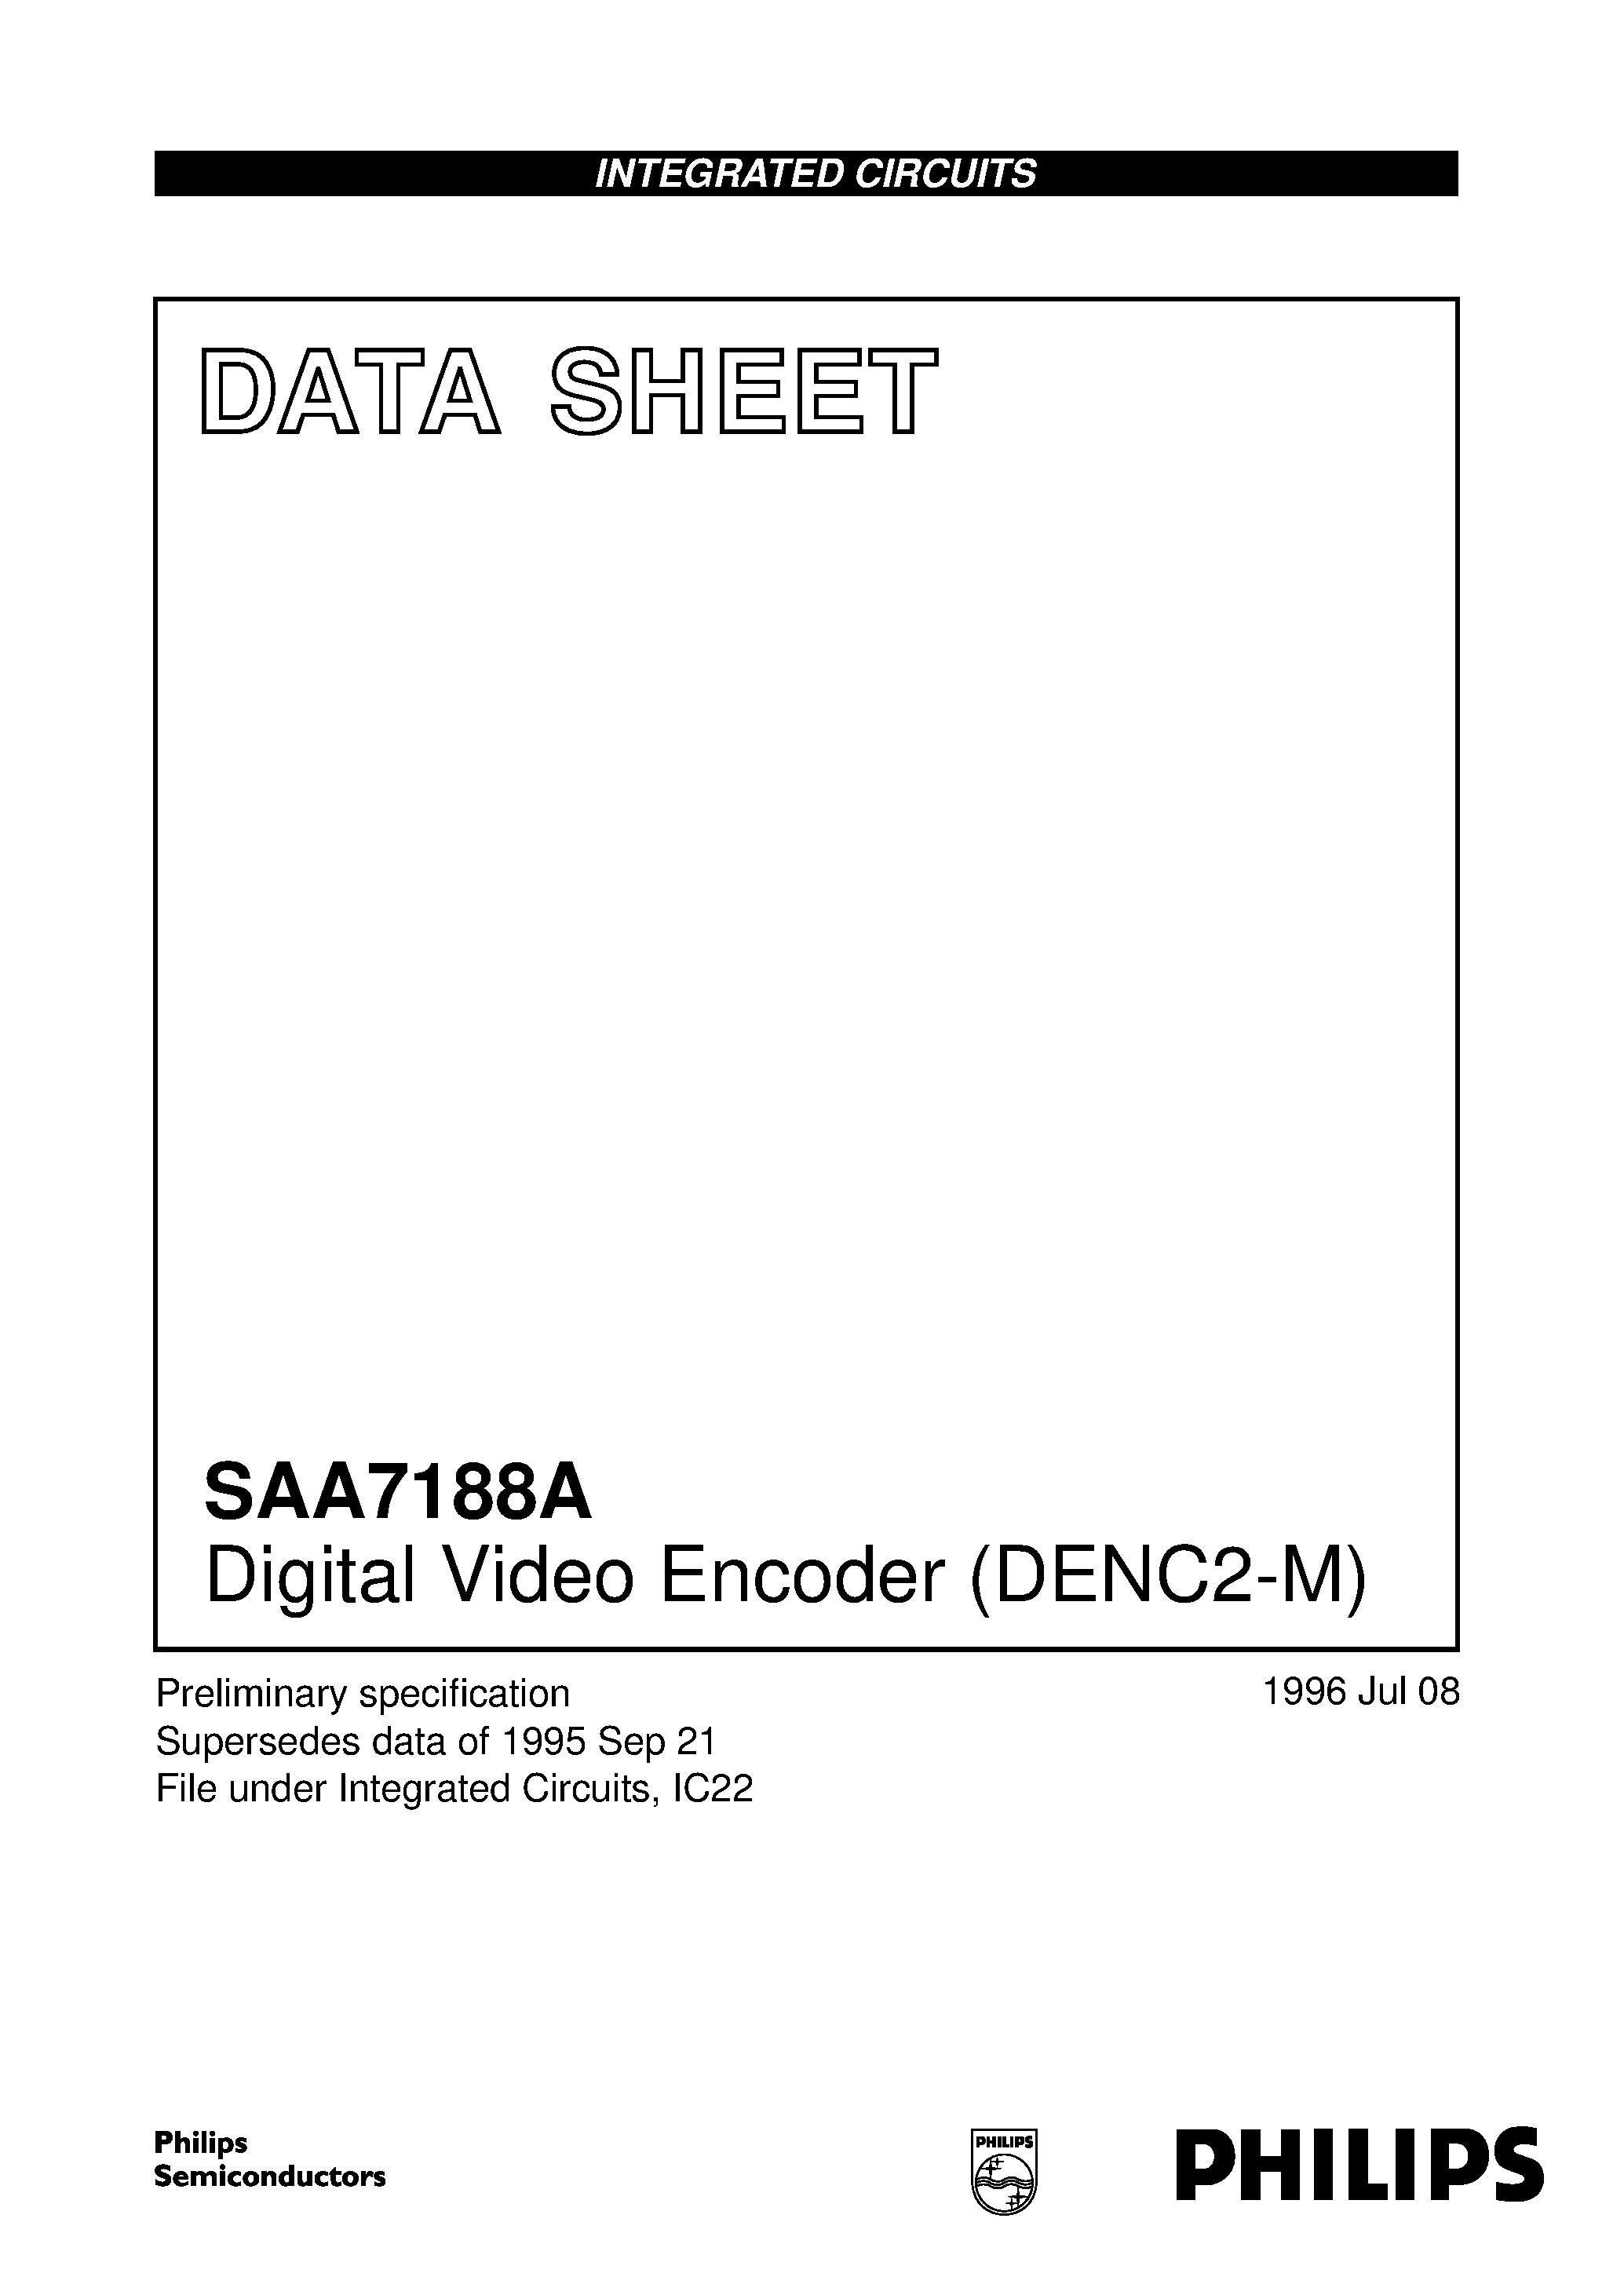 Datasheet SAA7188 - Digital Video Encoder DENC2-M page 1